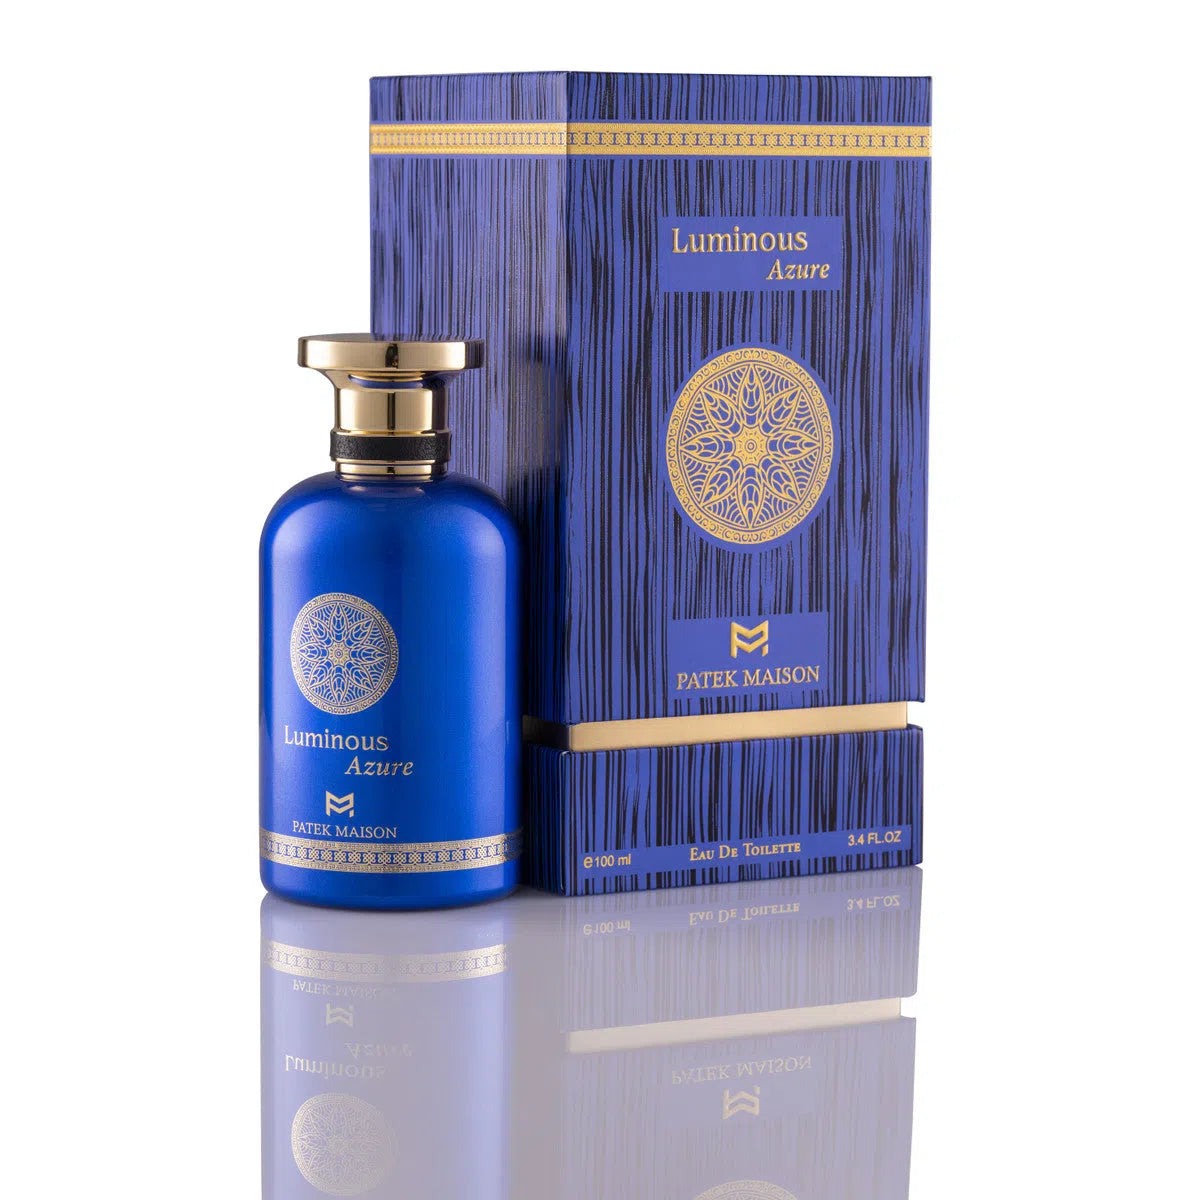 Perfume Patek Maison Luminous Azure EDT (M) / 100 ml - 850039142079- Prive Perfumes Honduras